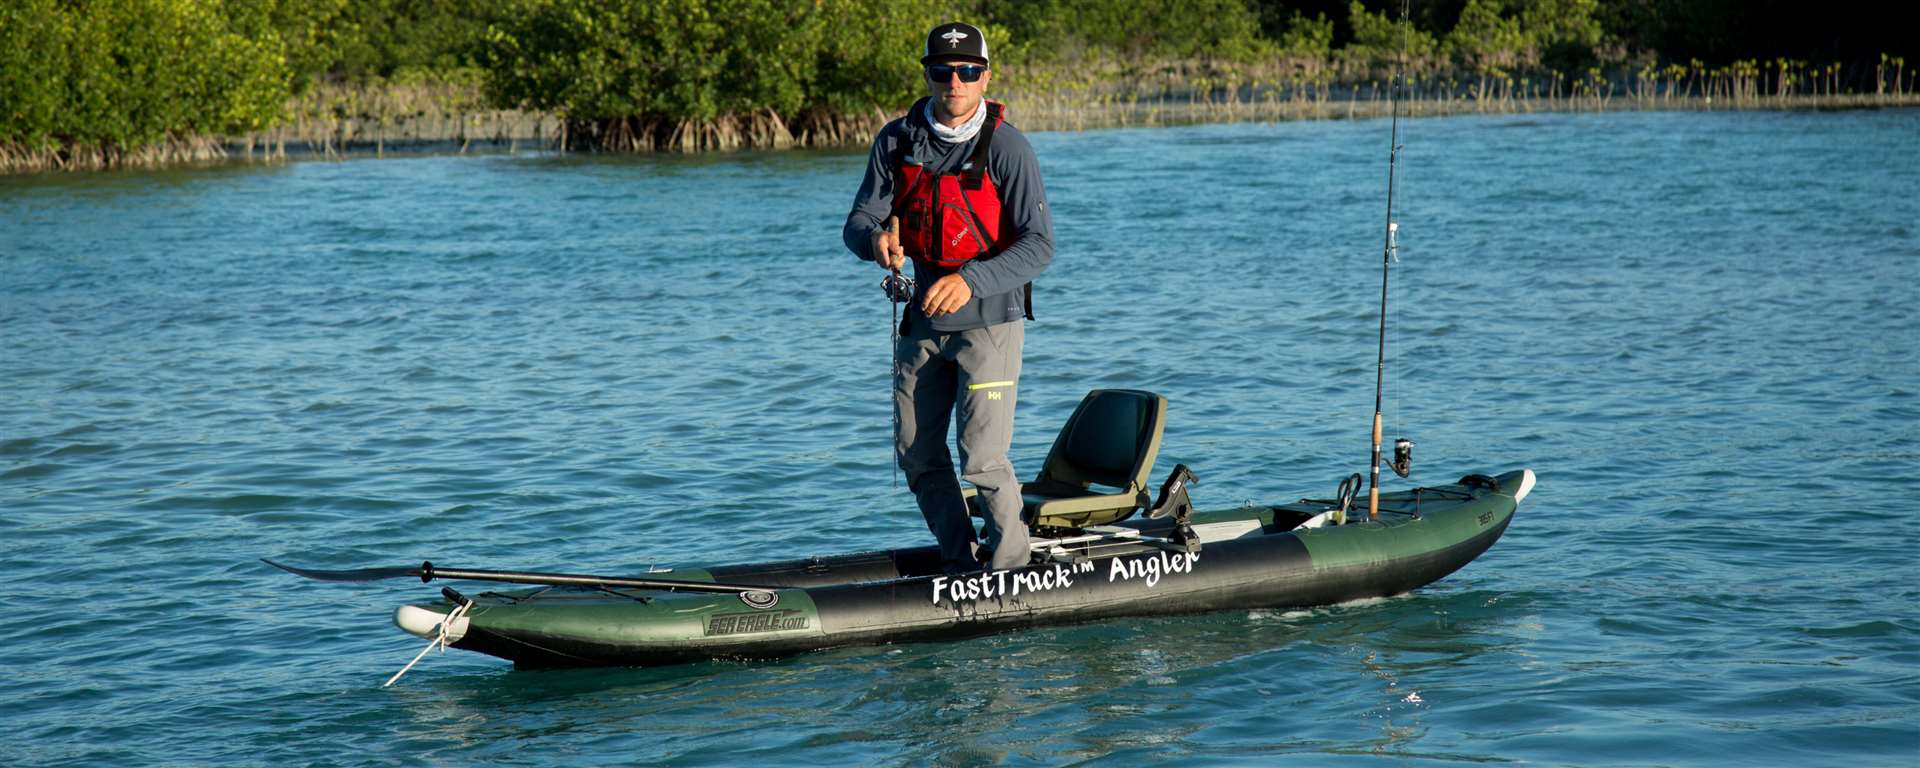 Sea Eagle 385fta FastTrack Inflatable Kayak Pro Angler Package